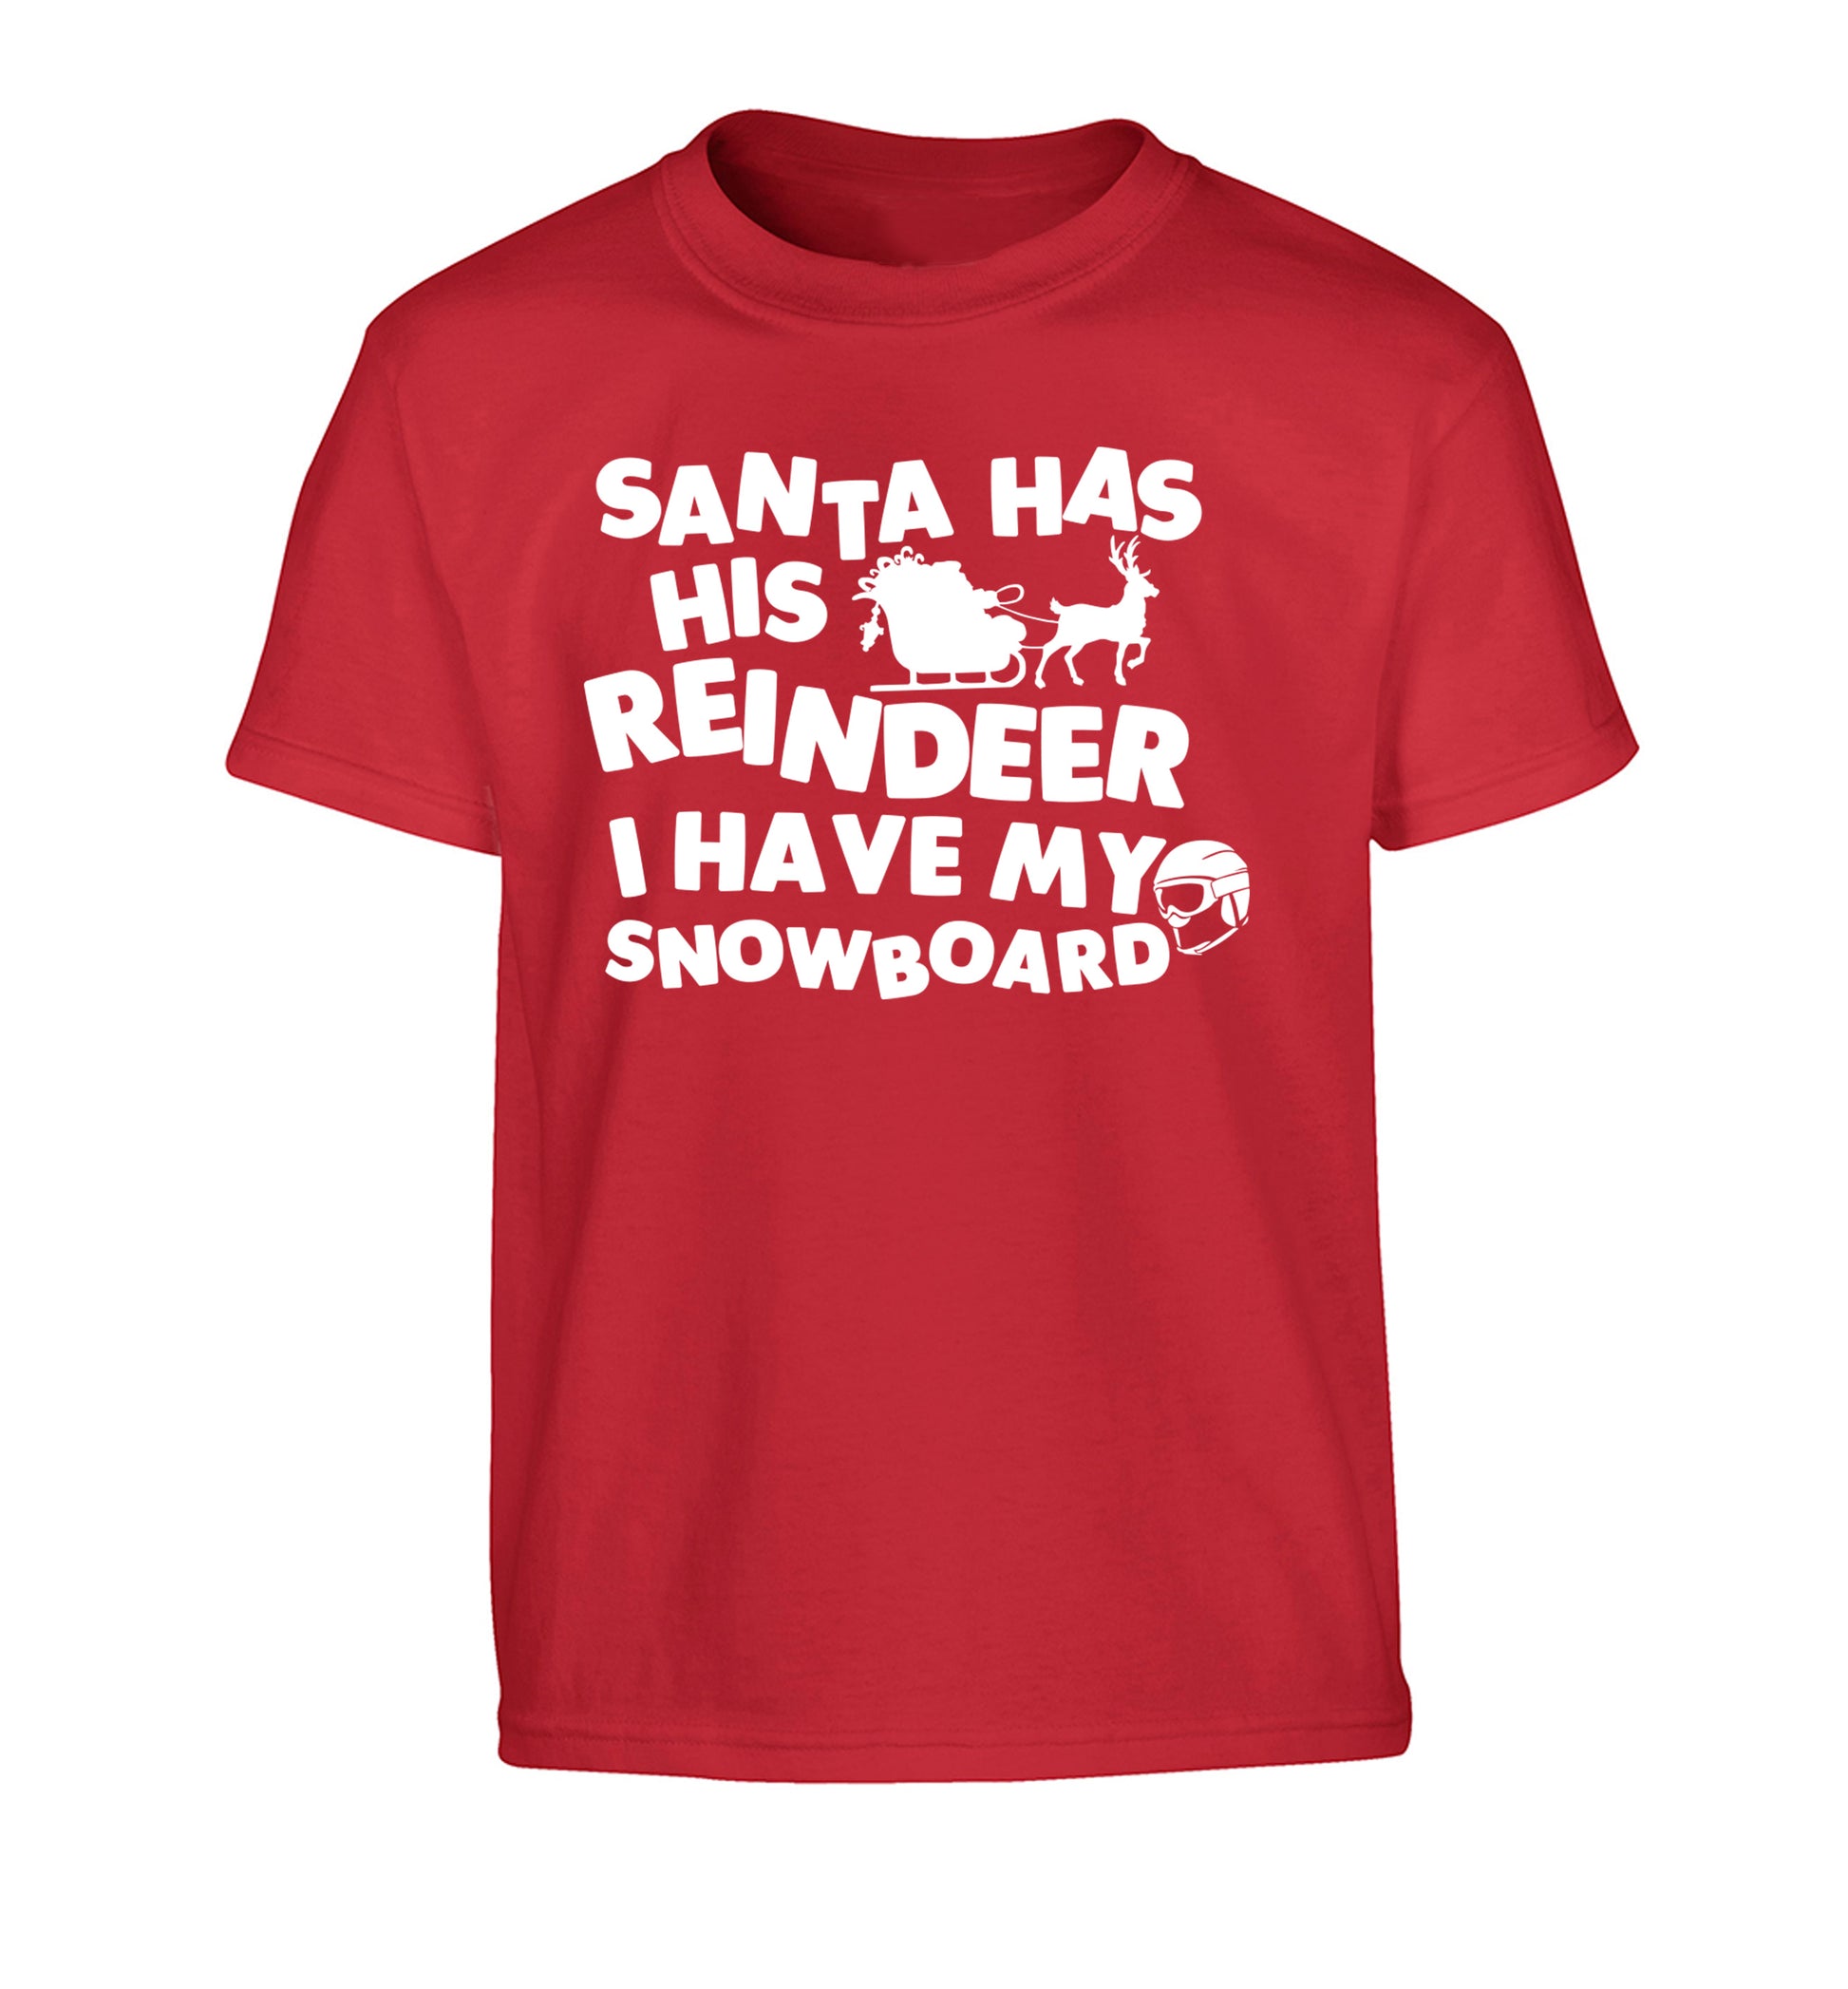 Santa has his reindeer I have my snowboard Children's red Tshirt 12-14 Years